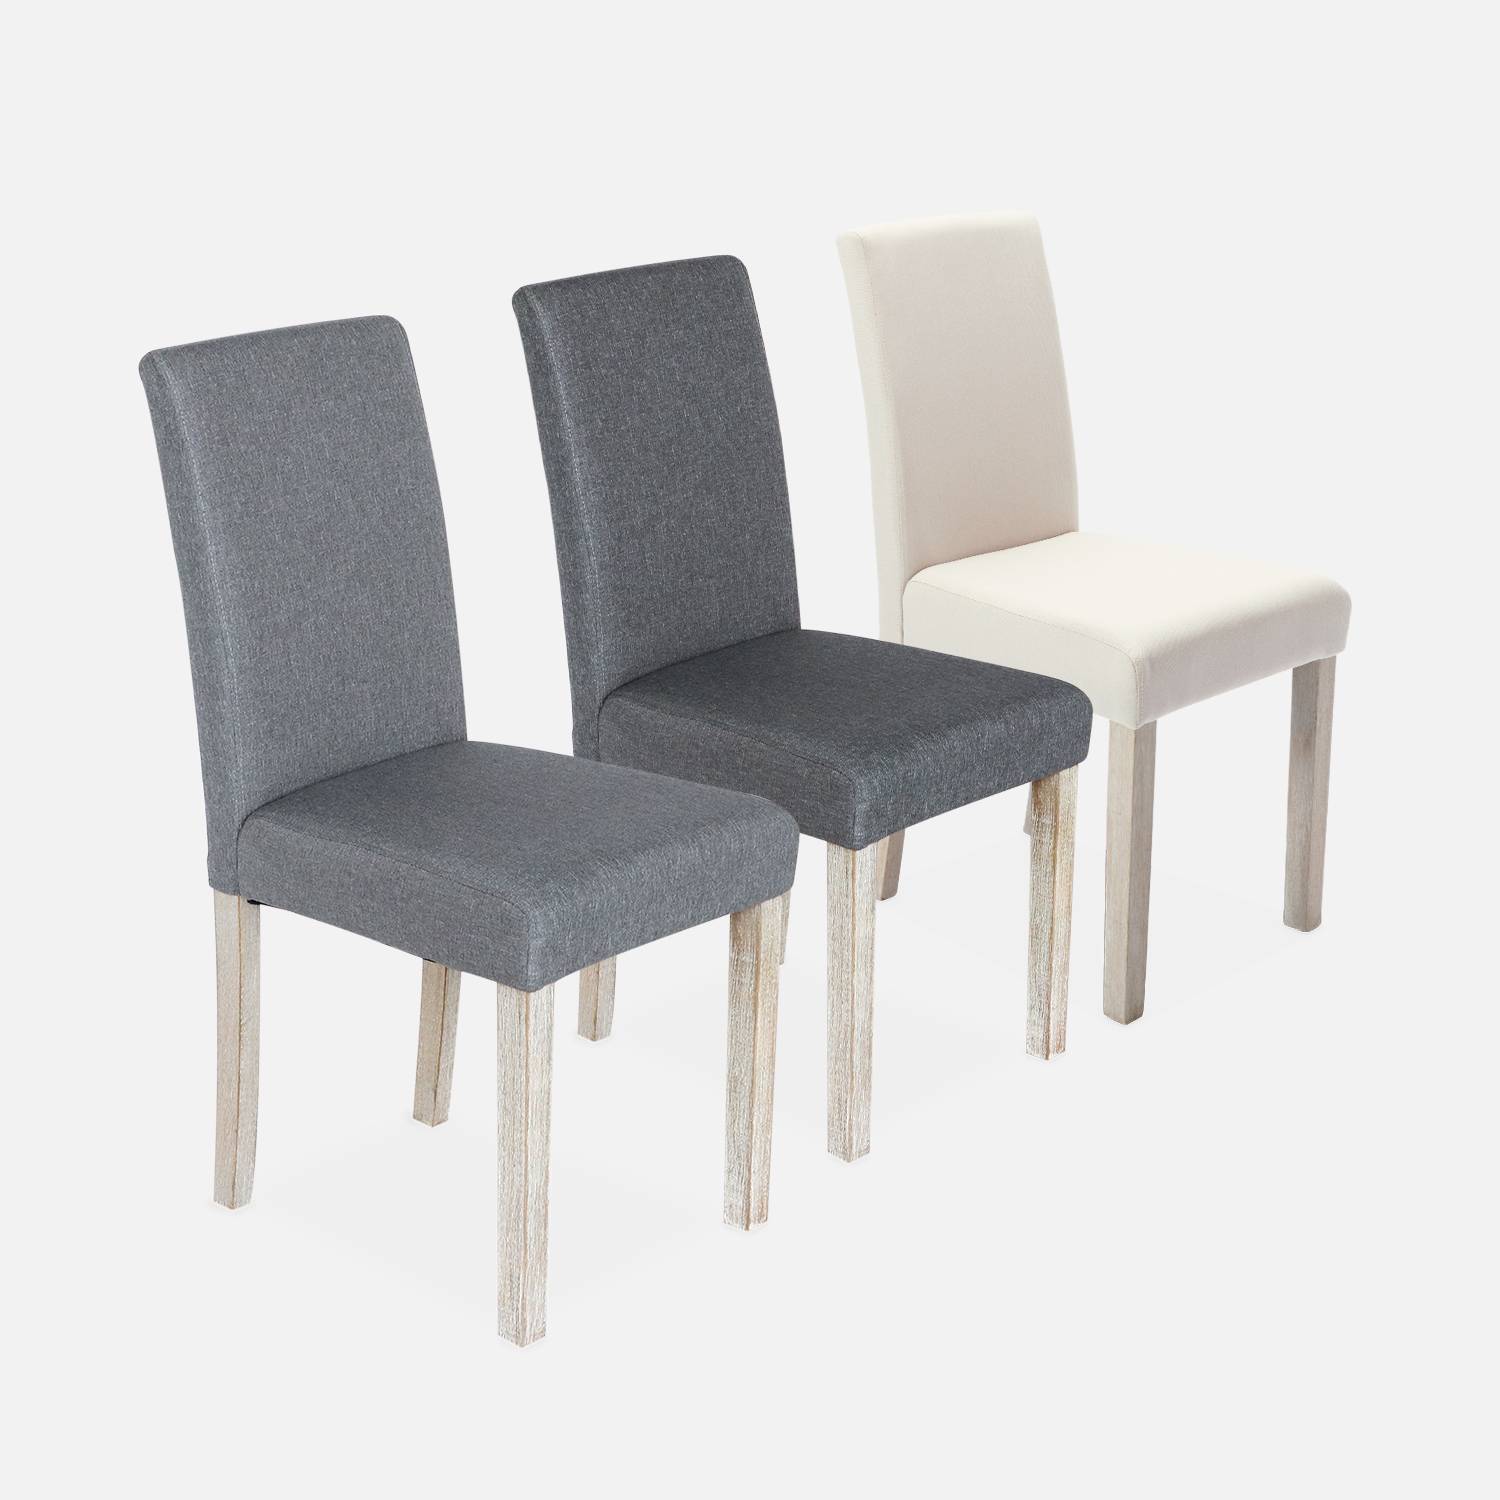 Set van 4 stoelen - stoffen stoelen, houten loodwitte poten  Photo5